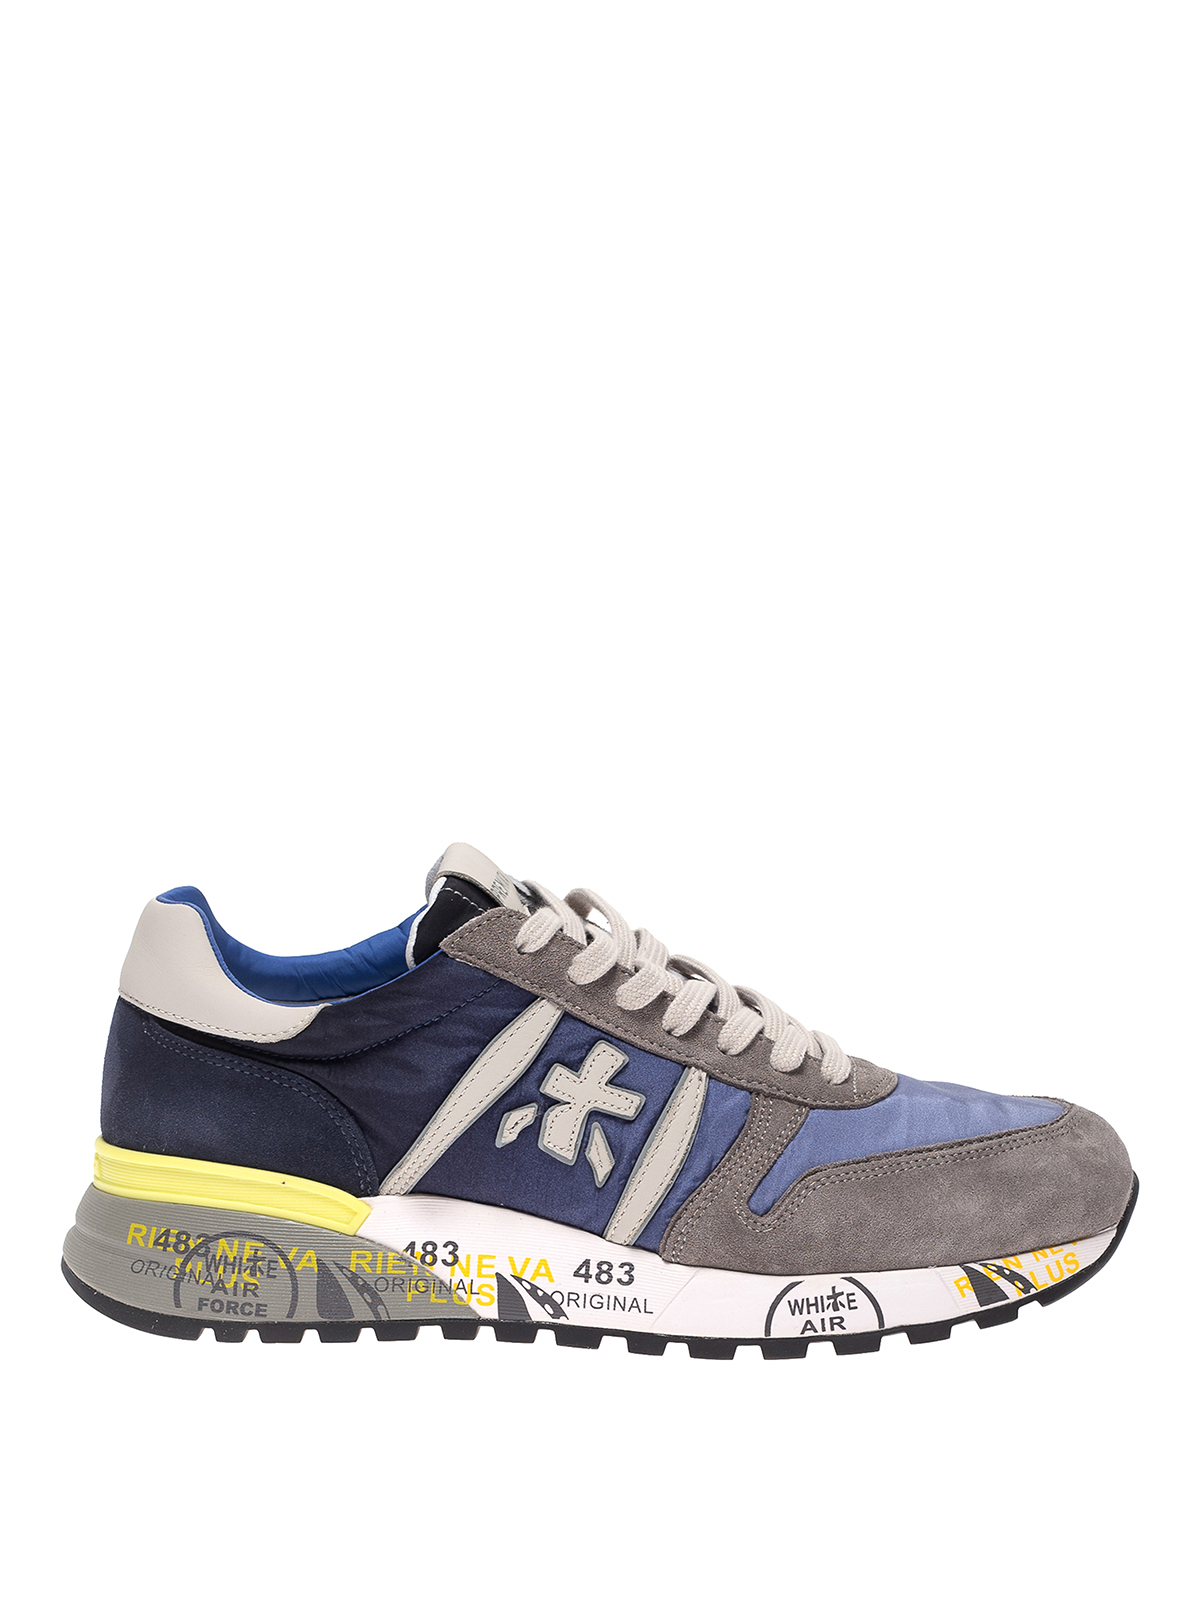 Premiata - Lander sneakers - trainers - LANDER4587 | Shop online at iKRIX